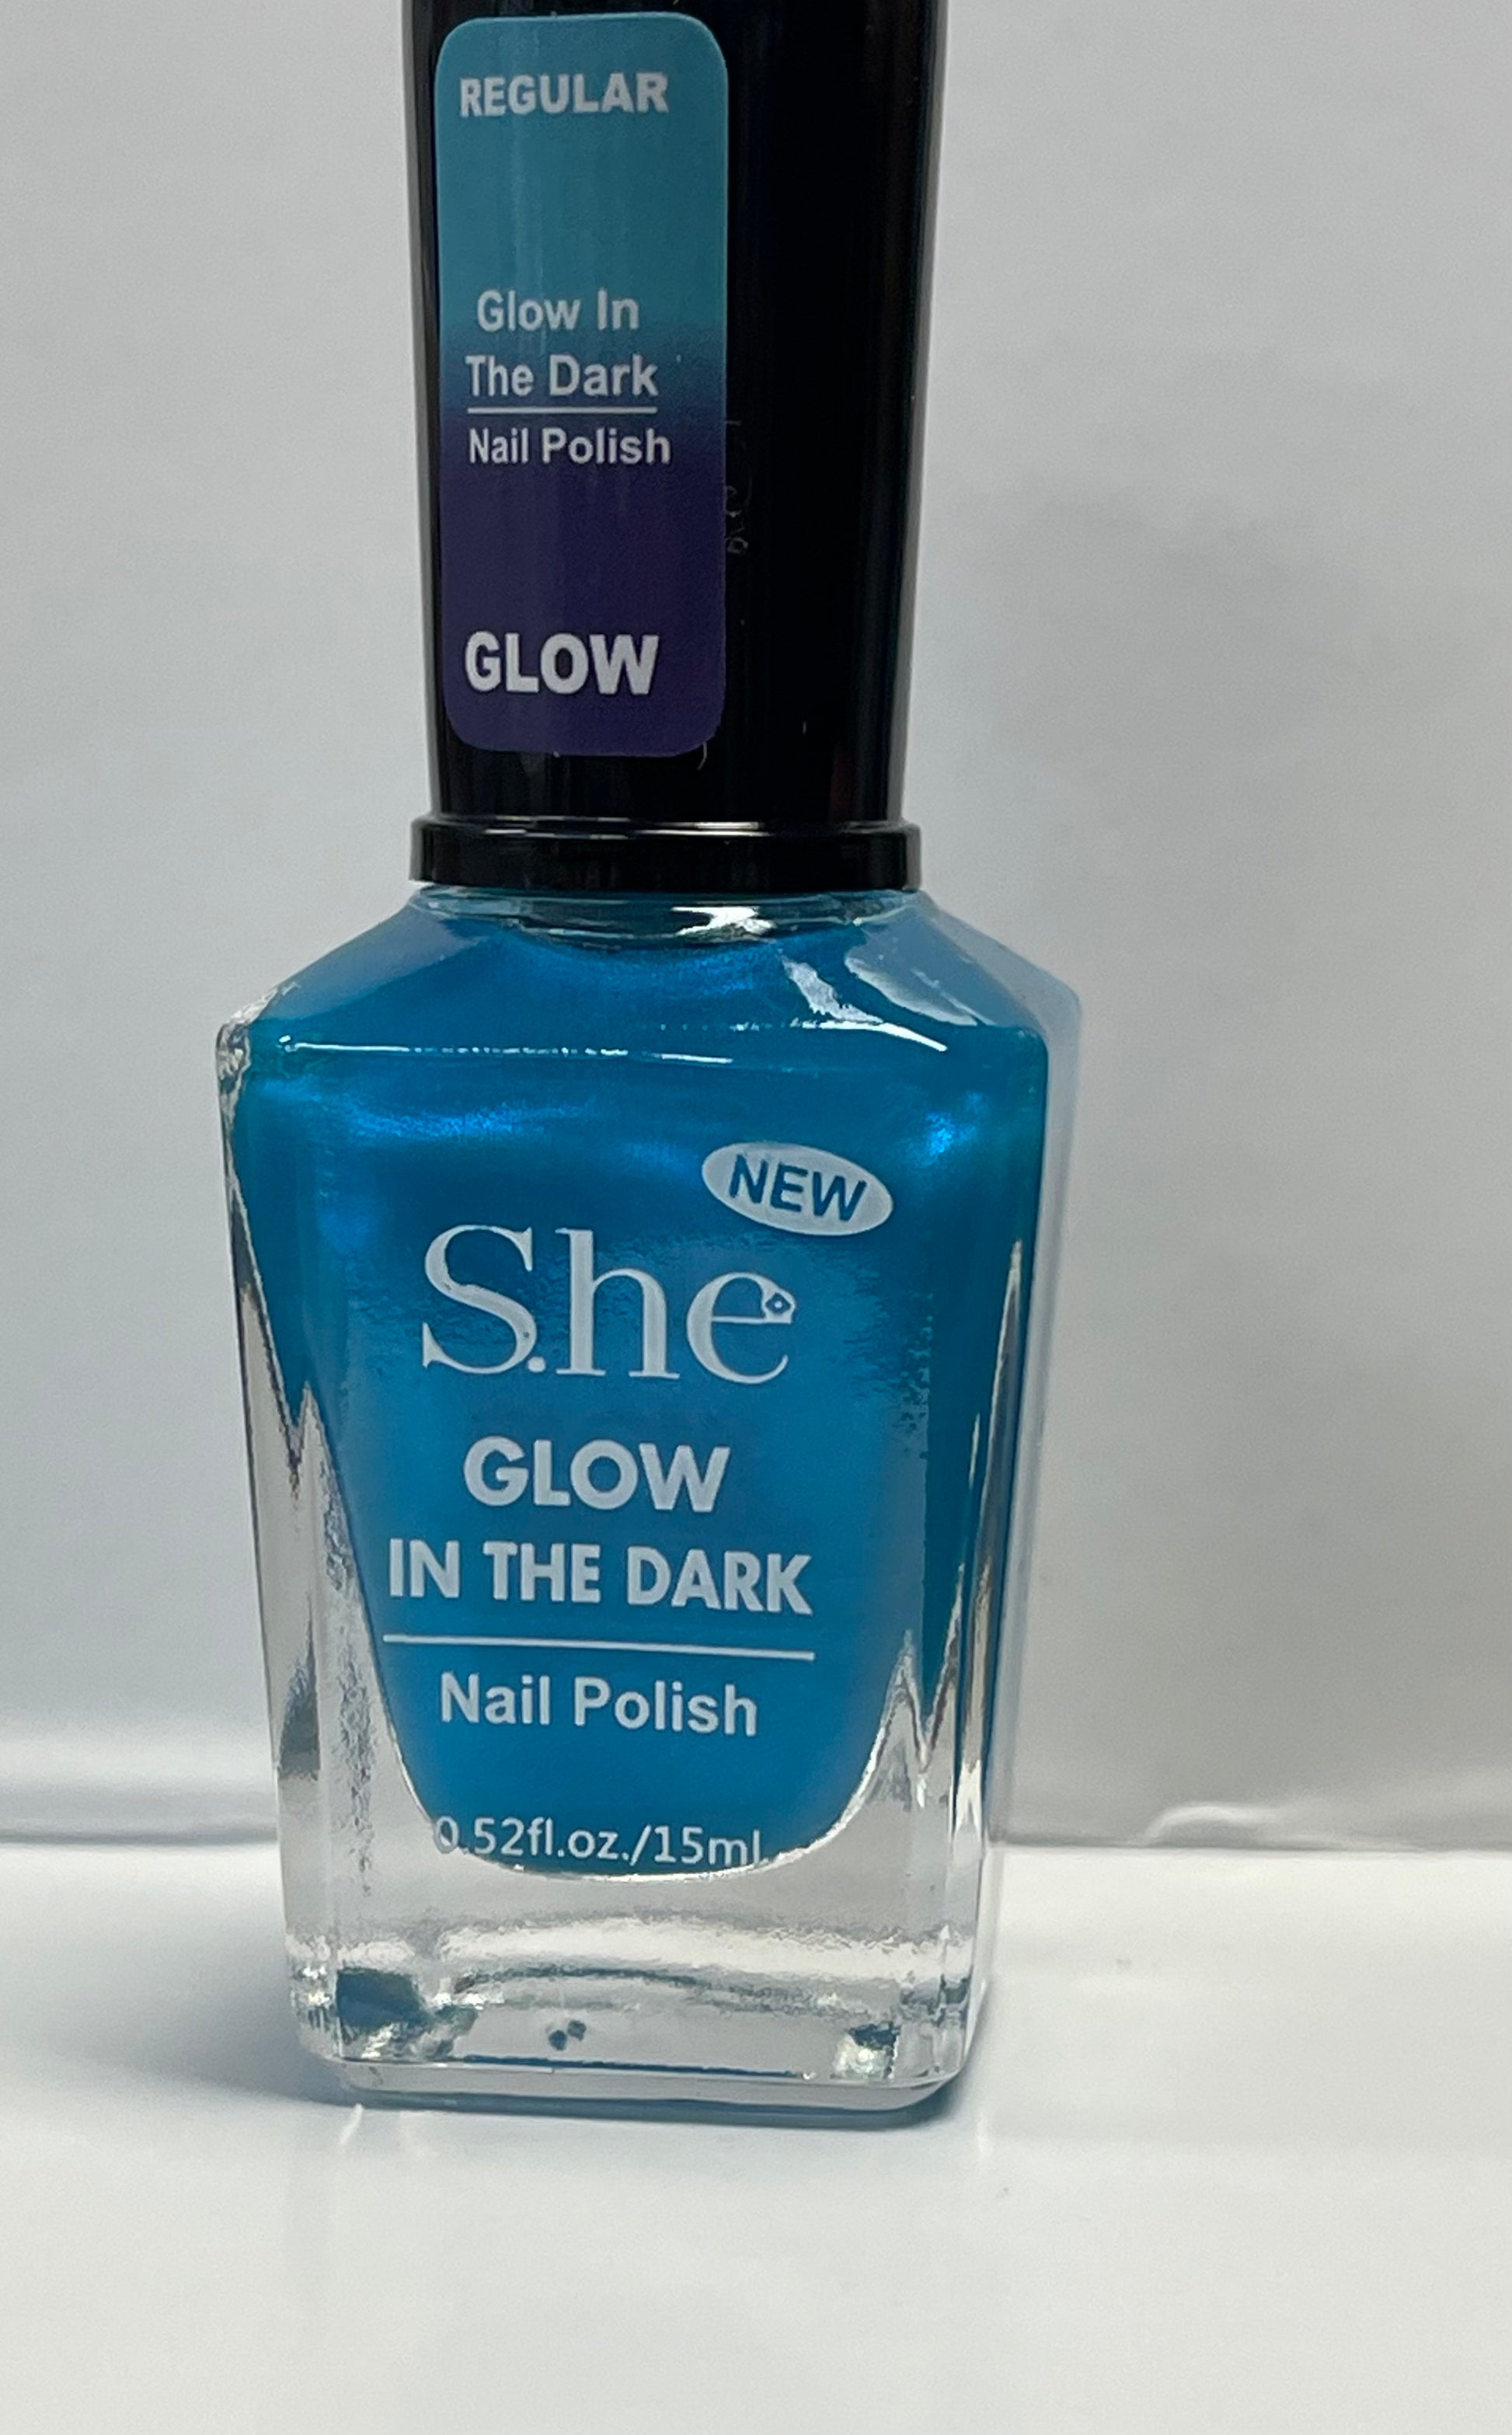 Glow in the dar nail polish (blue) - Tam's Natural Solutions